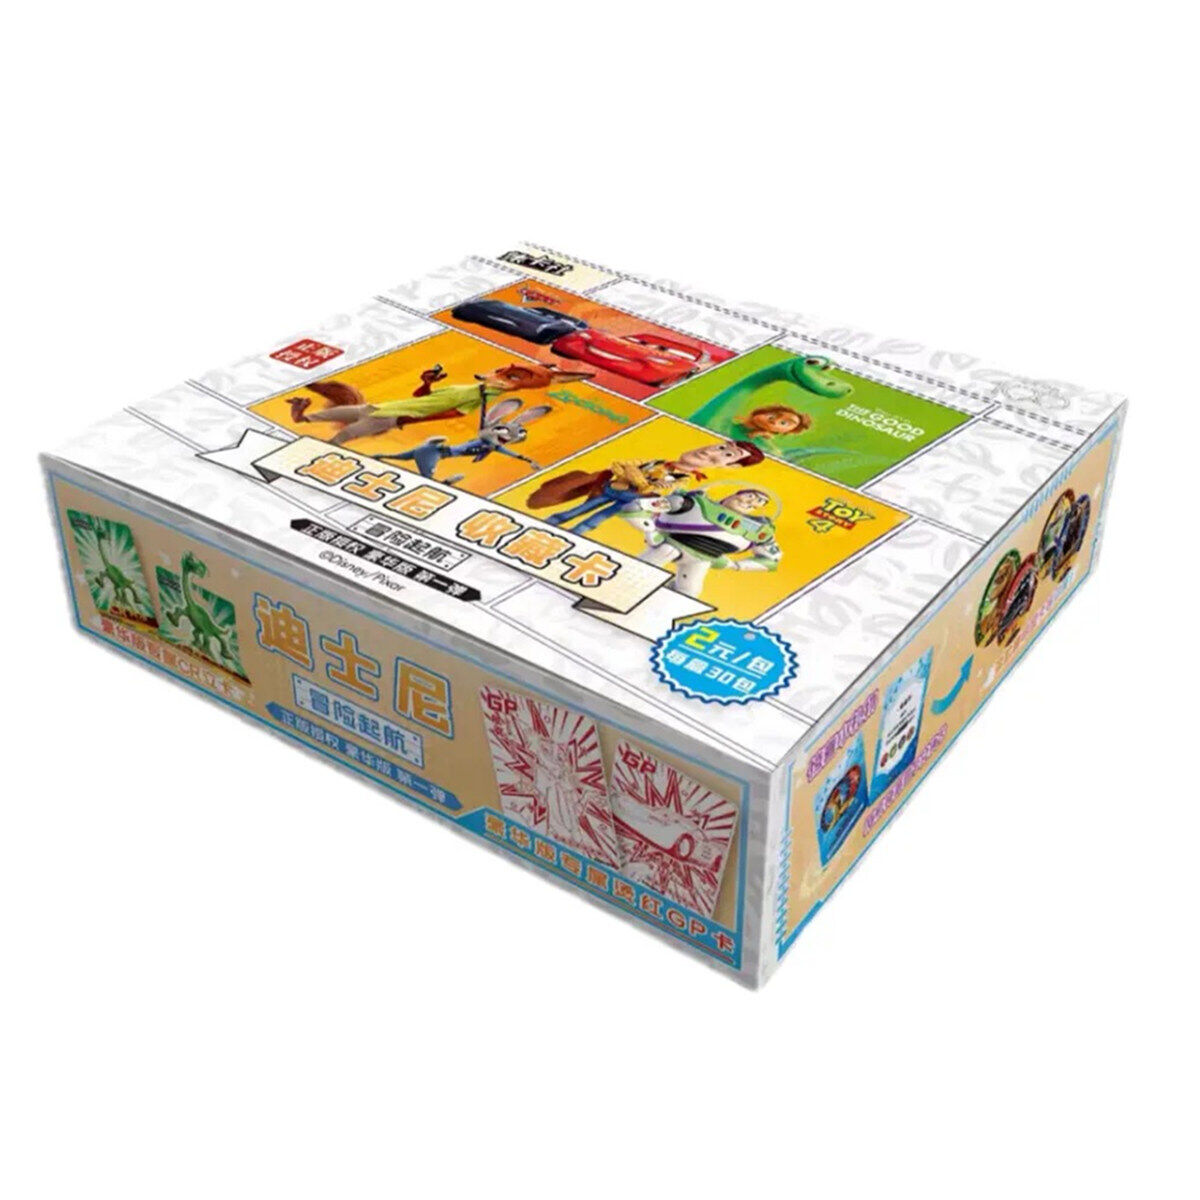 2023 CardFun card fun Disney Pixar 100 Trading Card 30 Pack Sealed Booster Box